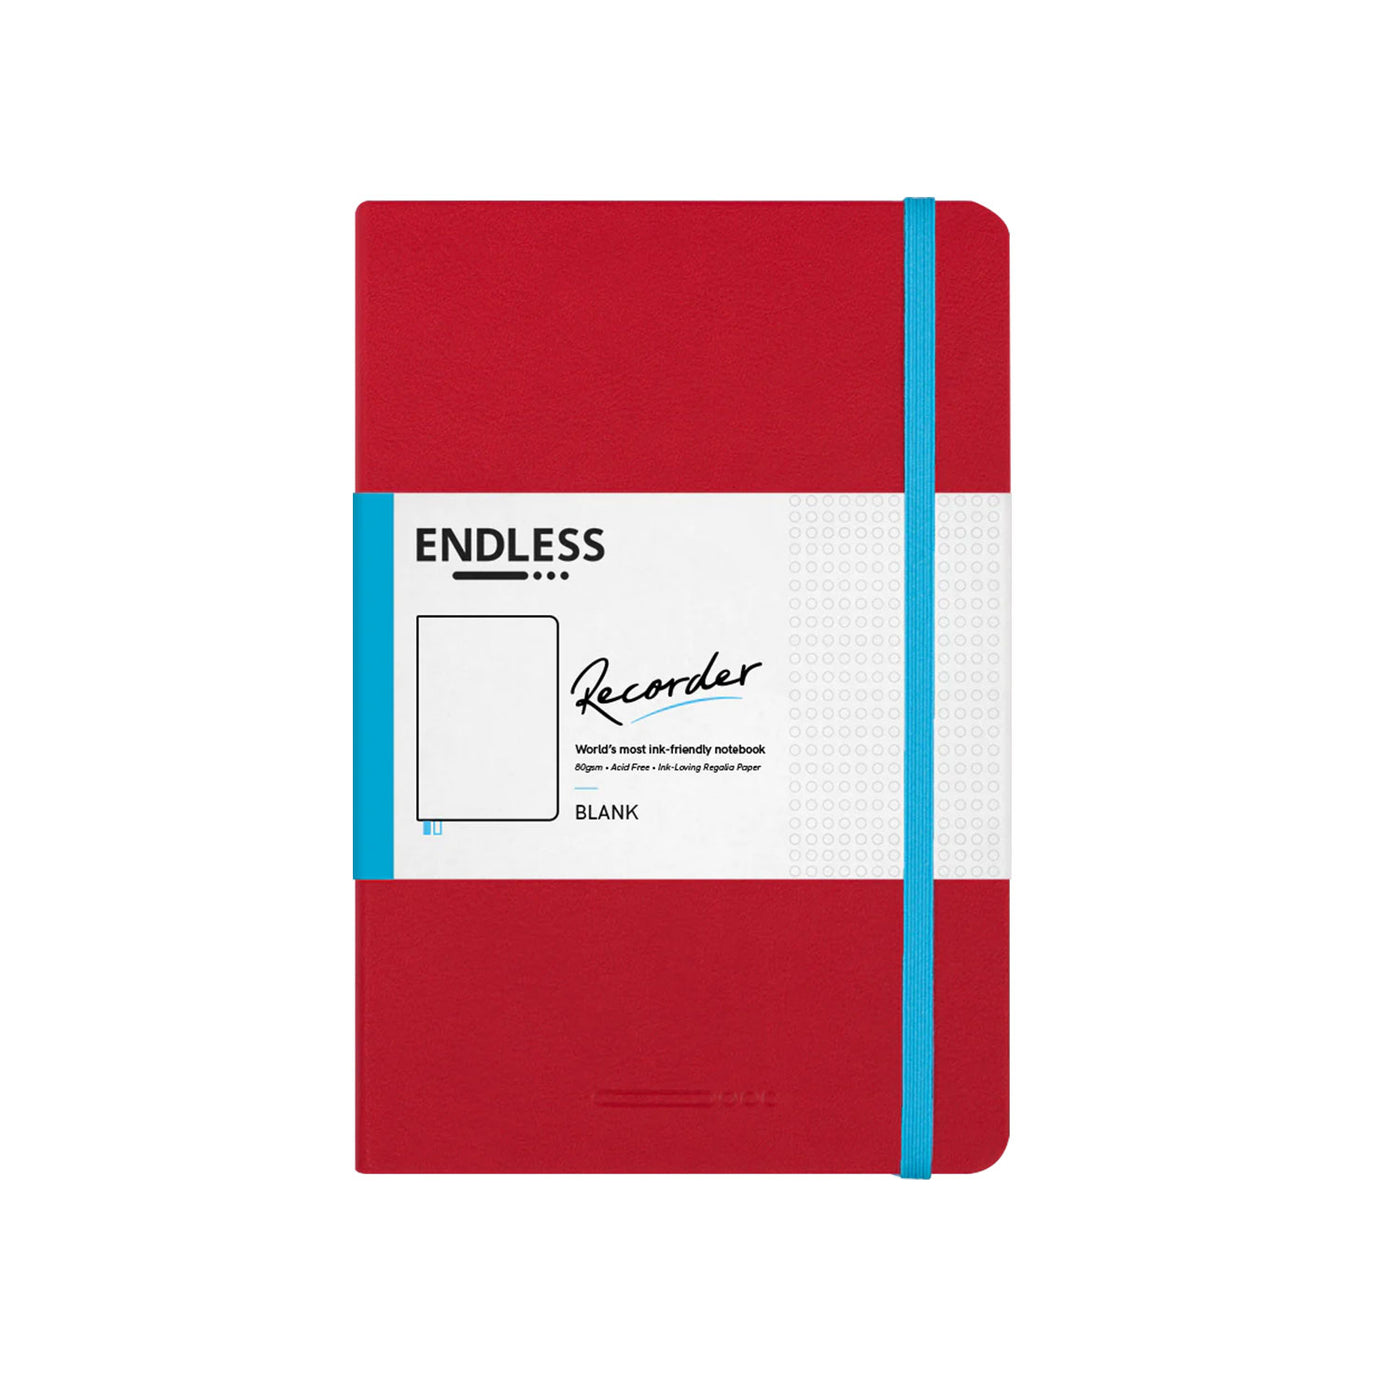 Endless Recorder Crimson Sky Red Regalia Notebook - A5, Plain